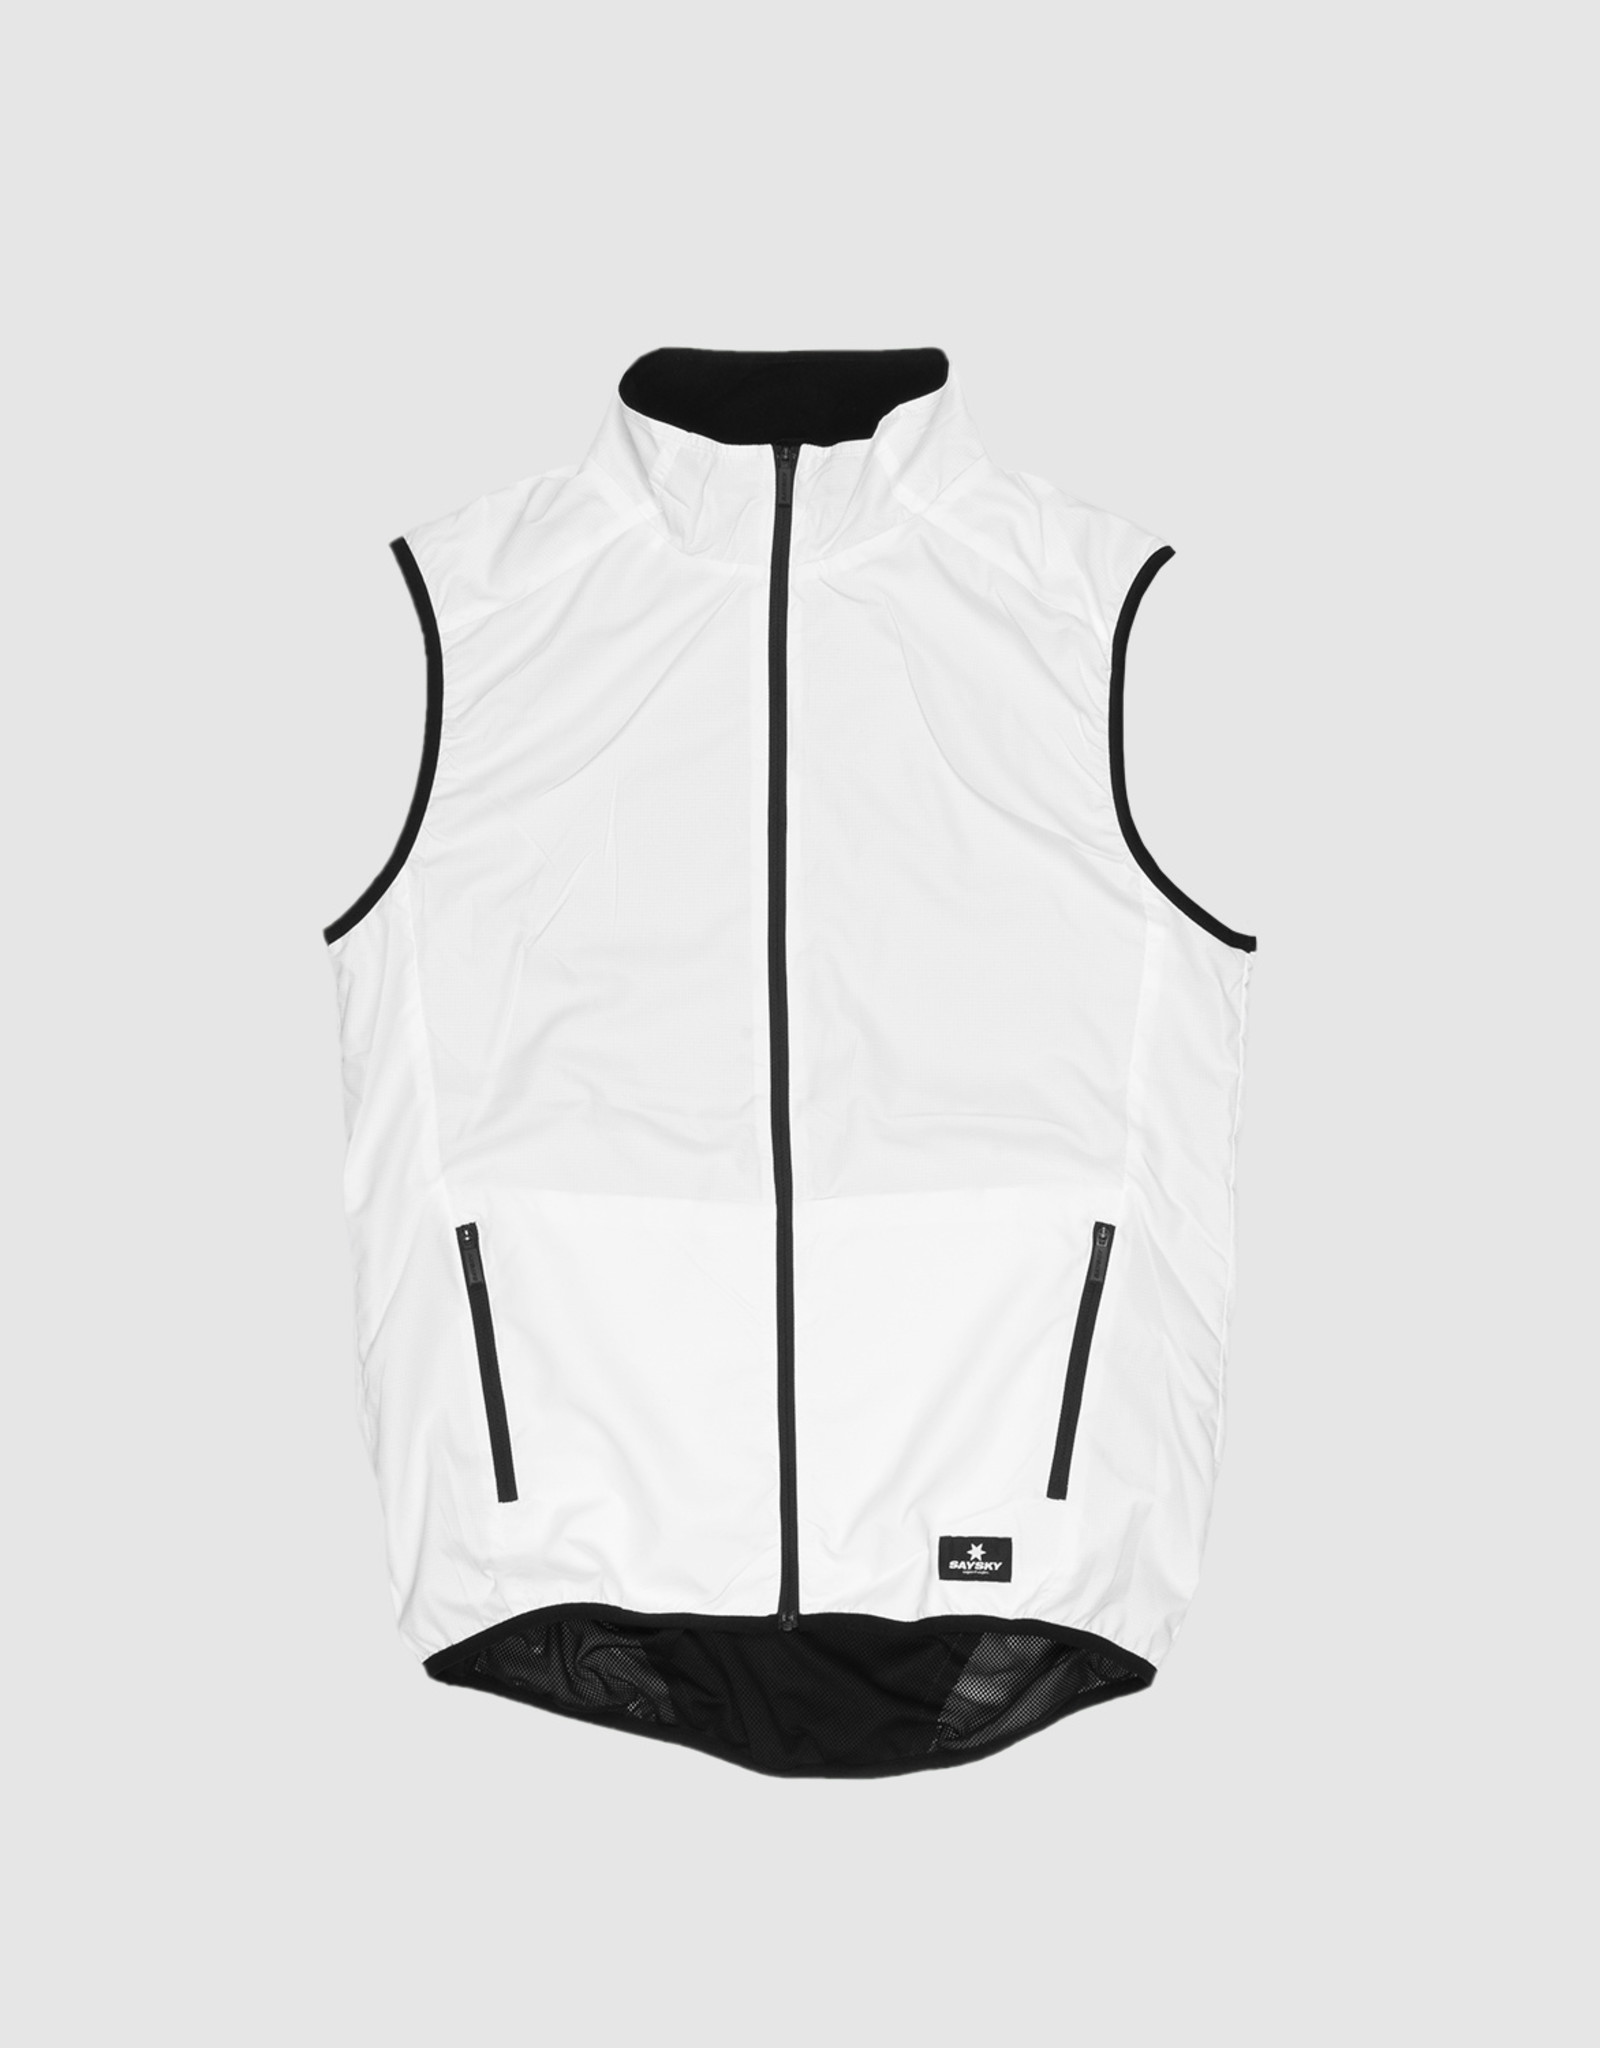 Saysky clean Pace vest (HMRVE01)